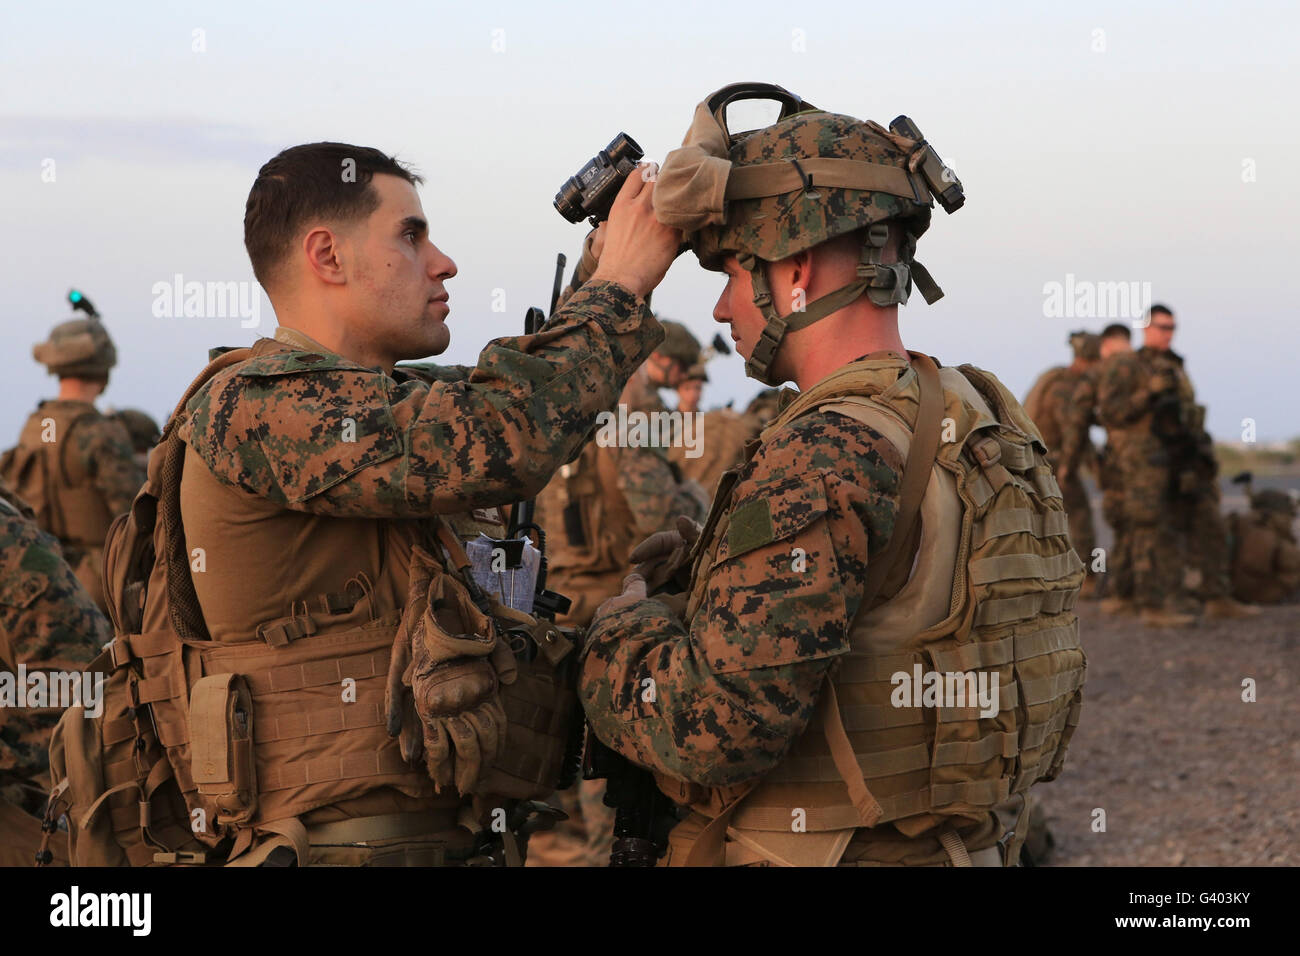 U.S. Marine inspects fellow U.S. Marine's equipment at Camp Lemonnier. Stock Photo